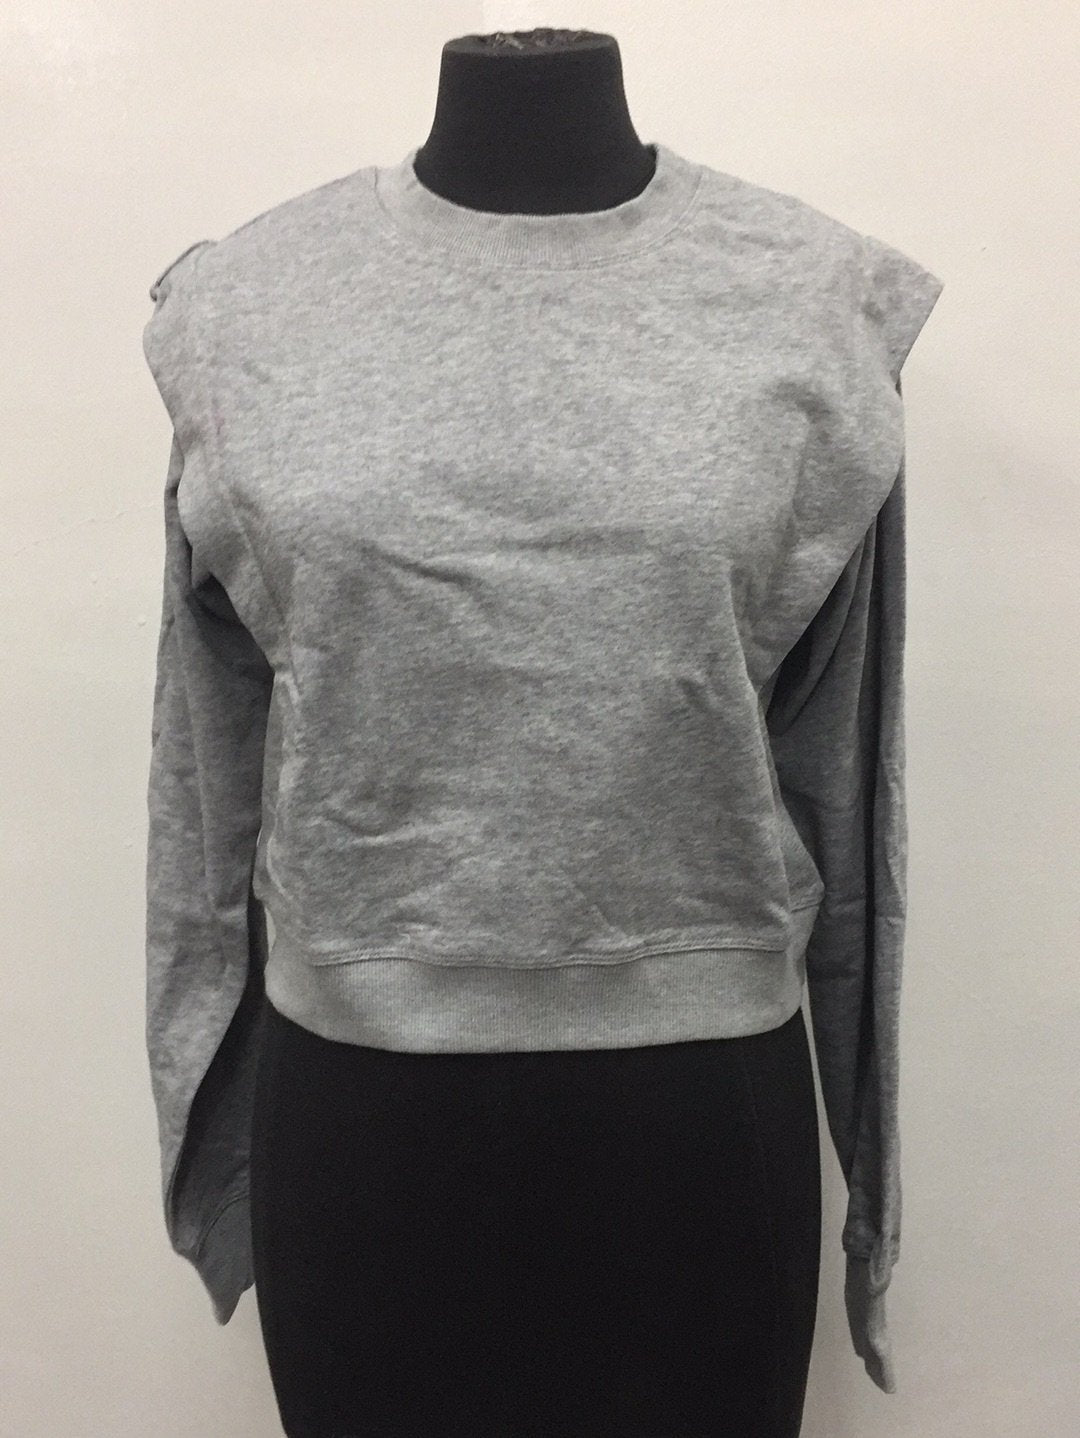 Lini Women Gaby Straight Shoulder Sweatshirt, Gray, M